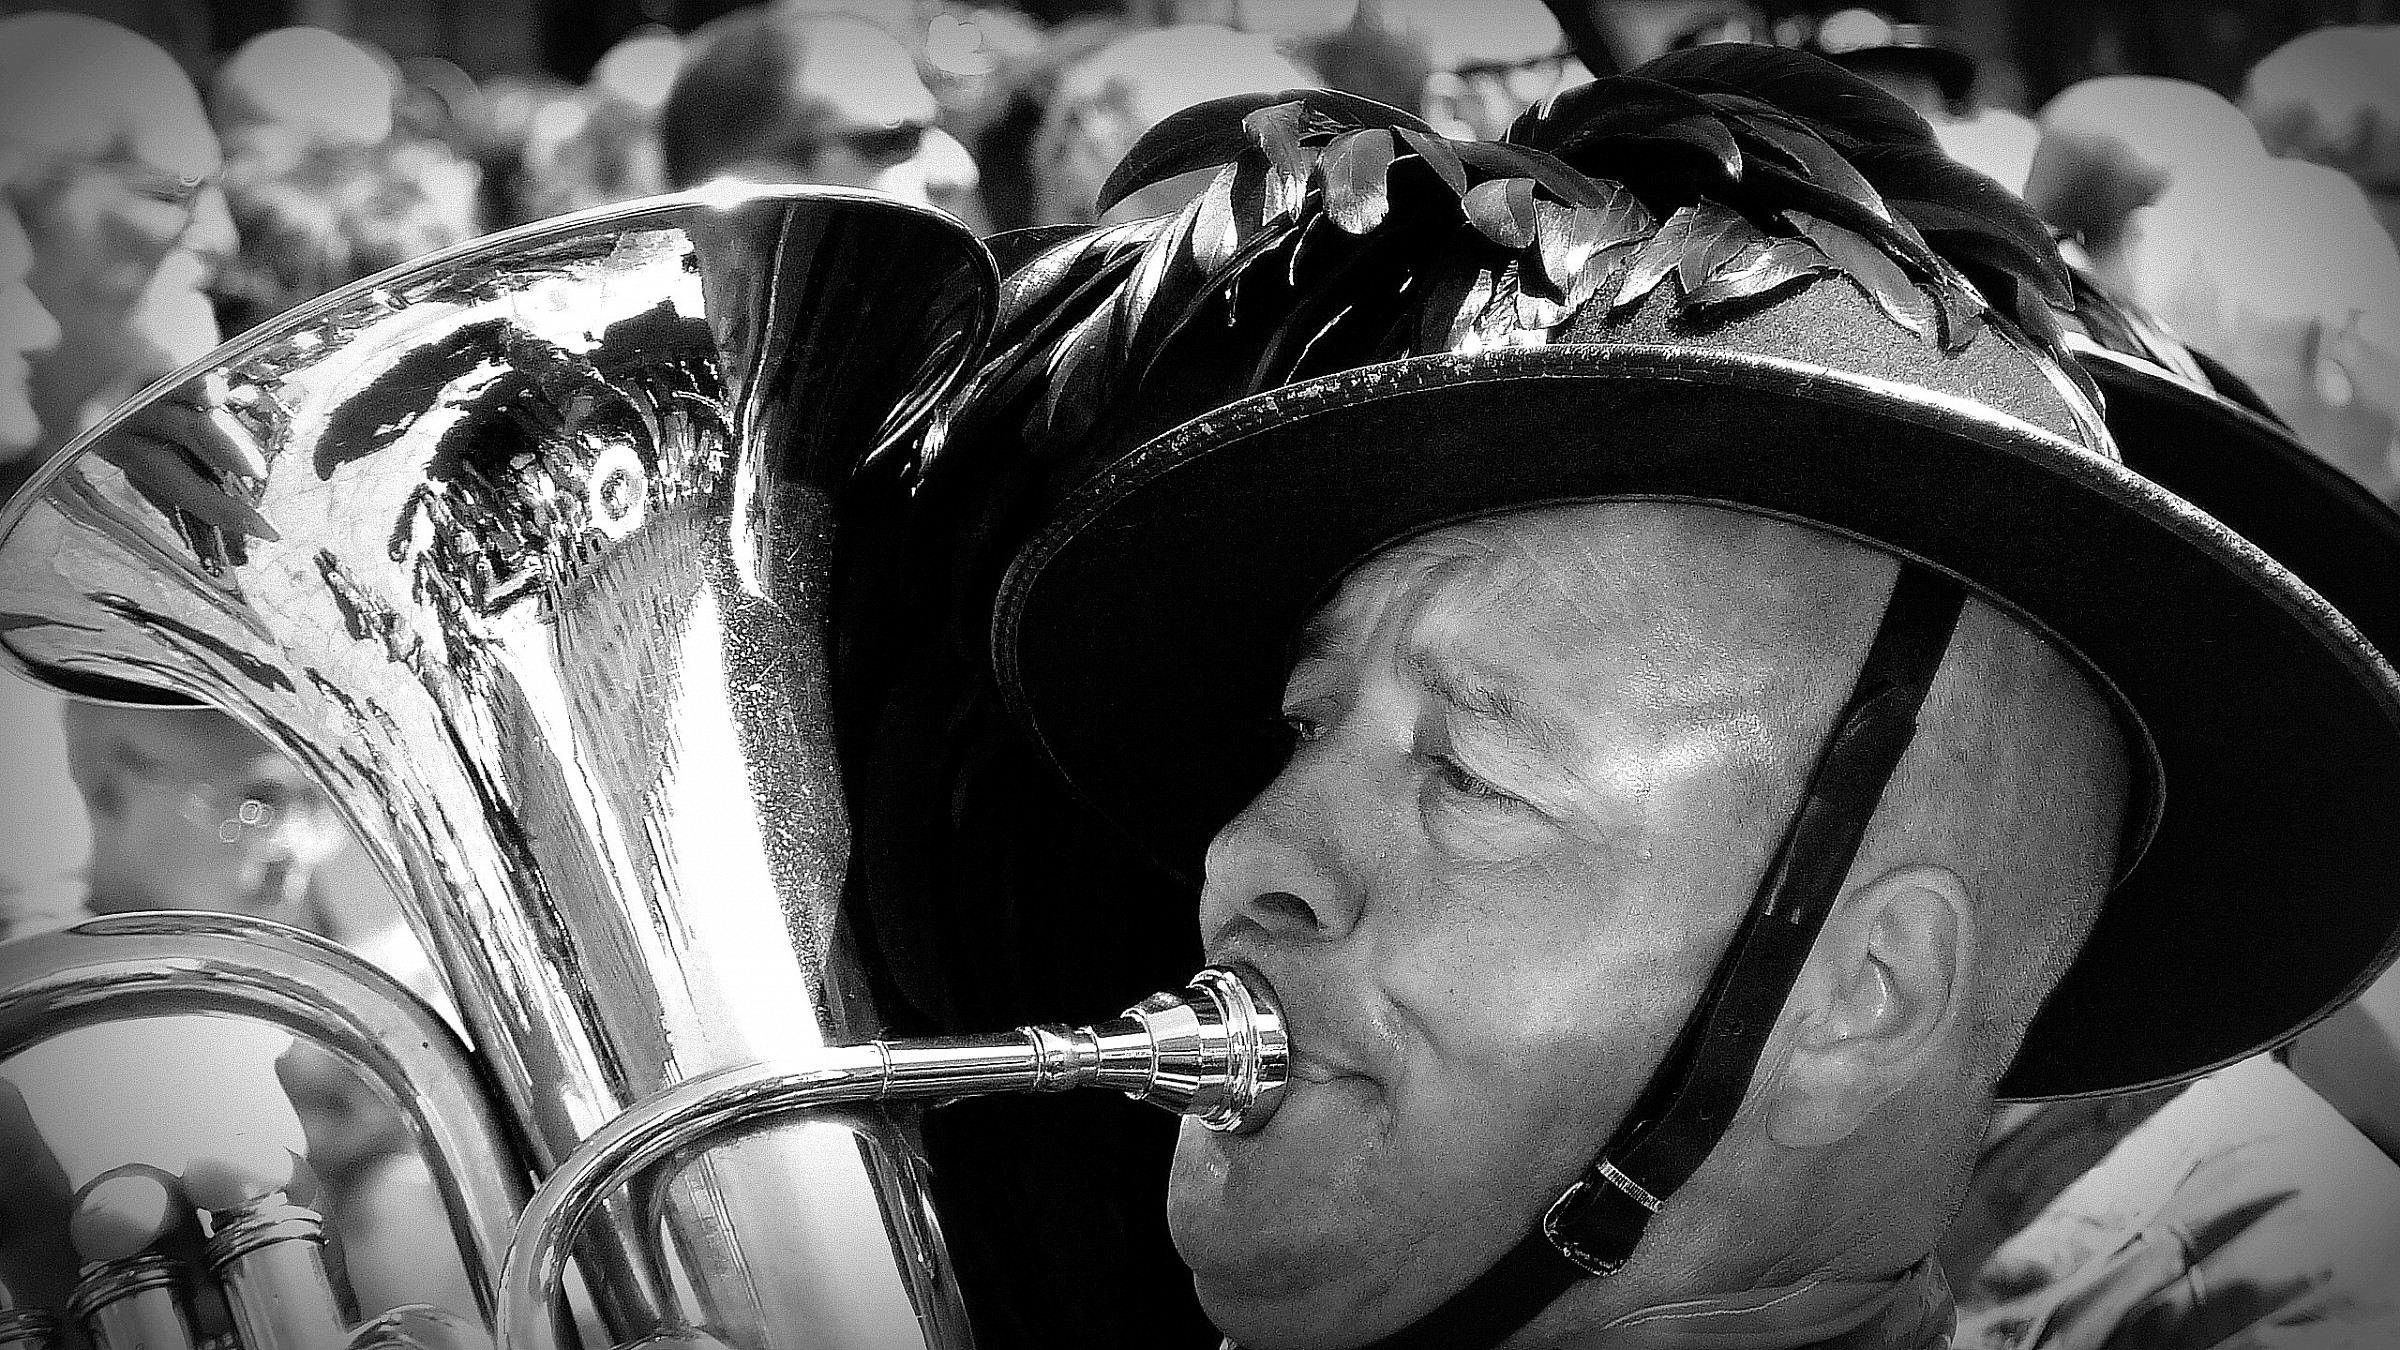 the trombone...